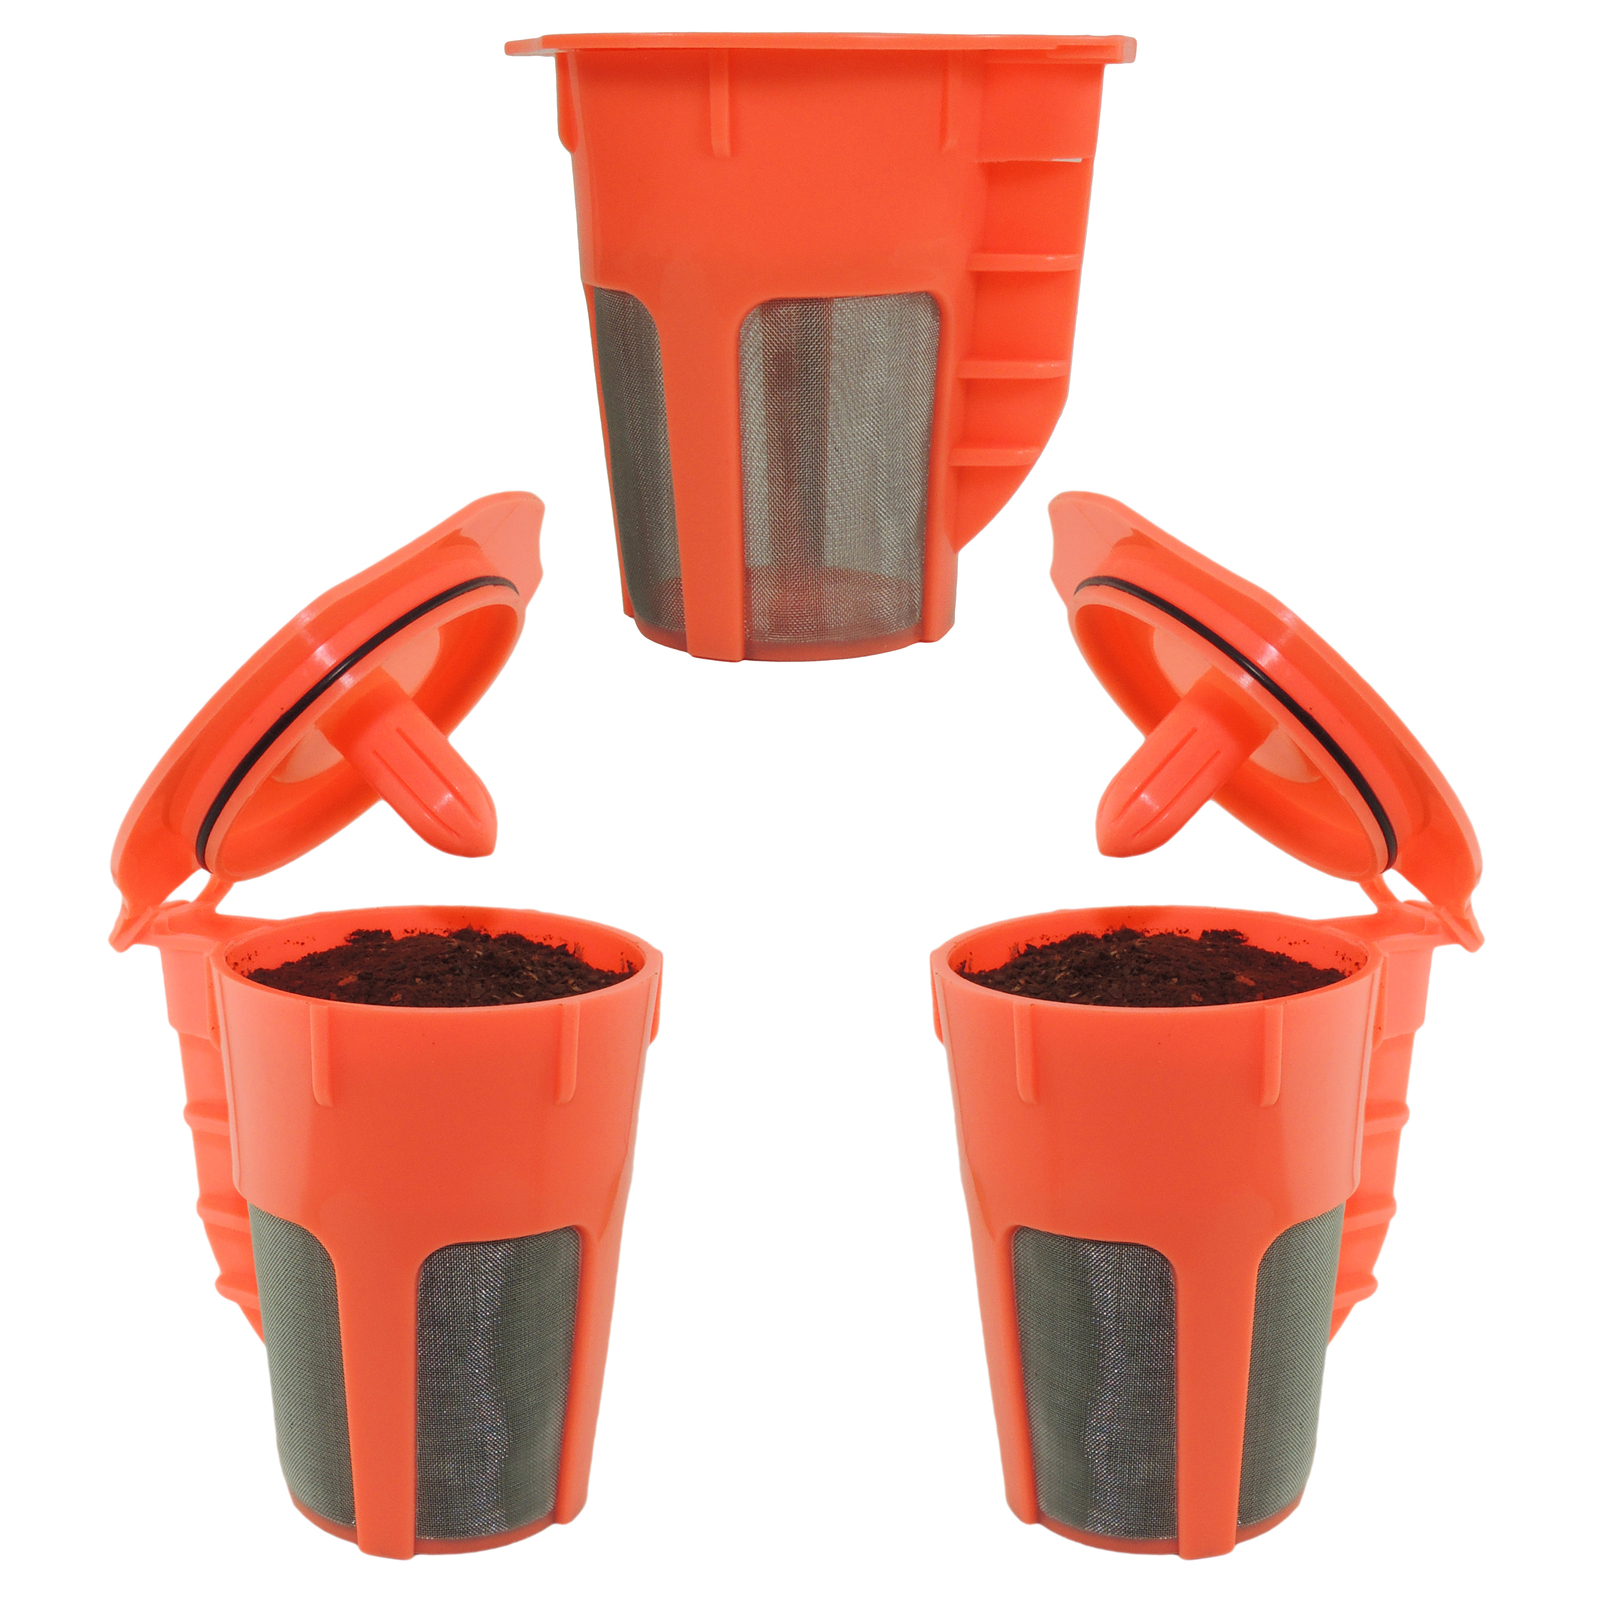 Keurig 2.0 K-carafe Reusable K-cup Filter Keurig K-cups for 2.0 Brewers 3-Pack - $14.99